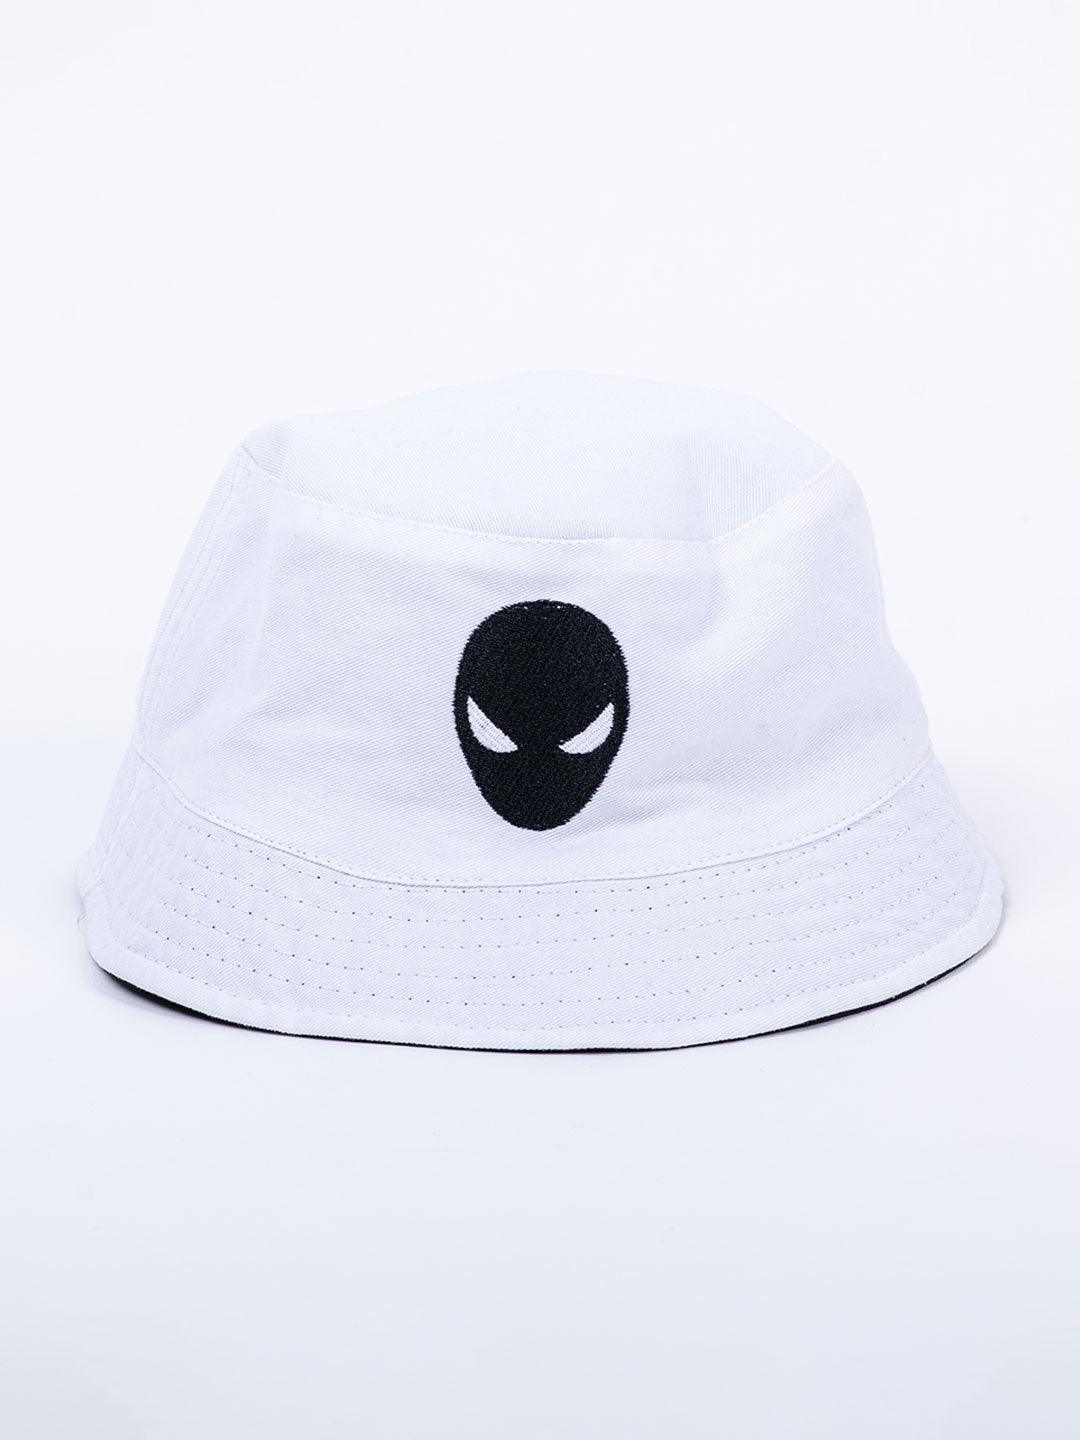 Black And White Embroidered Regular Size Unisex Reversible Hat - Tistabene